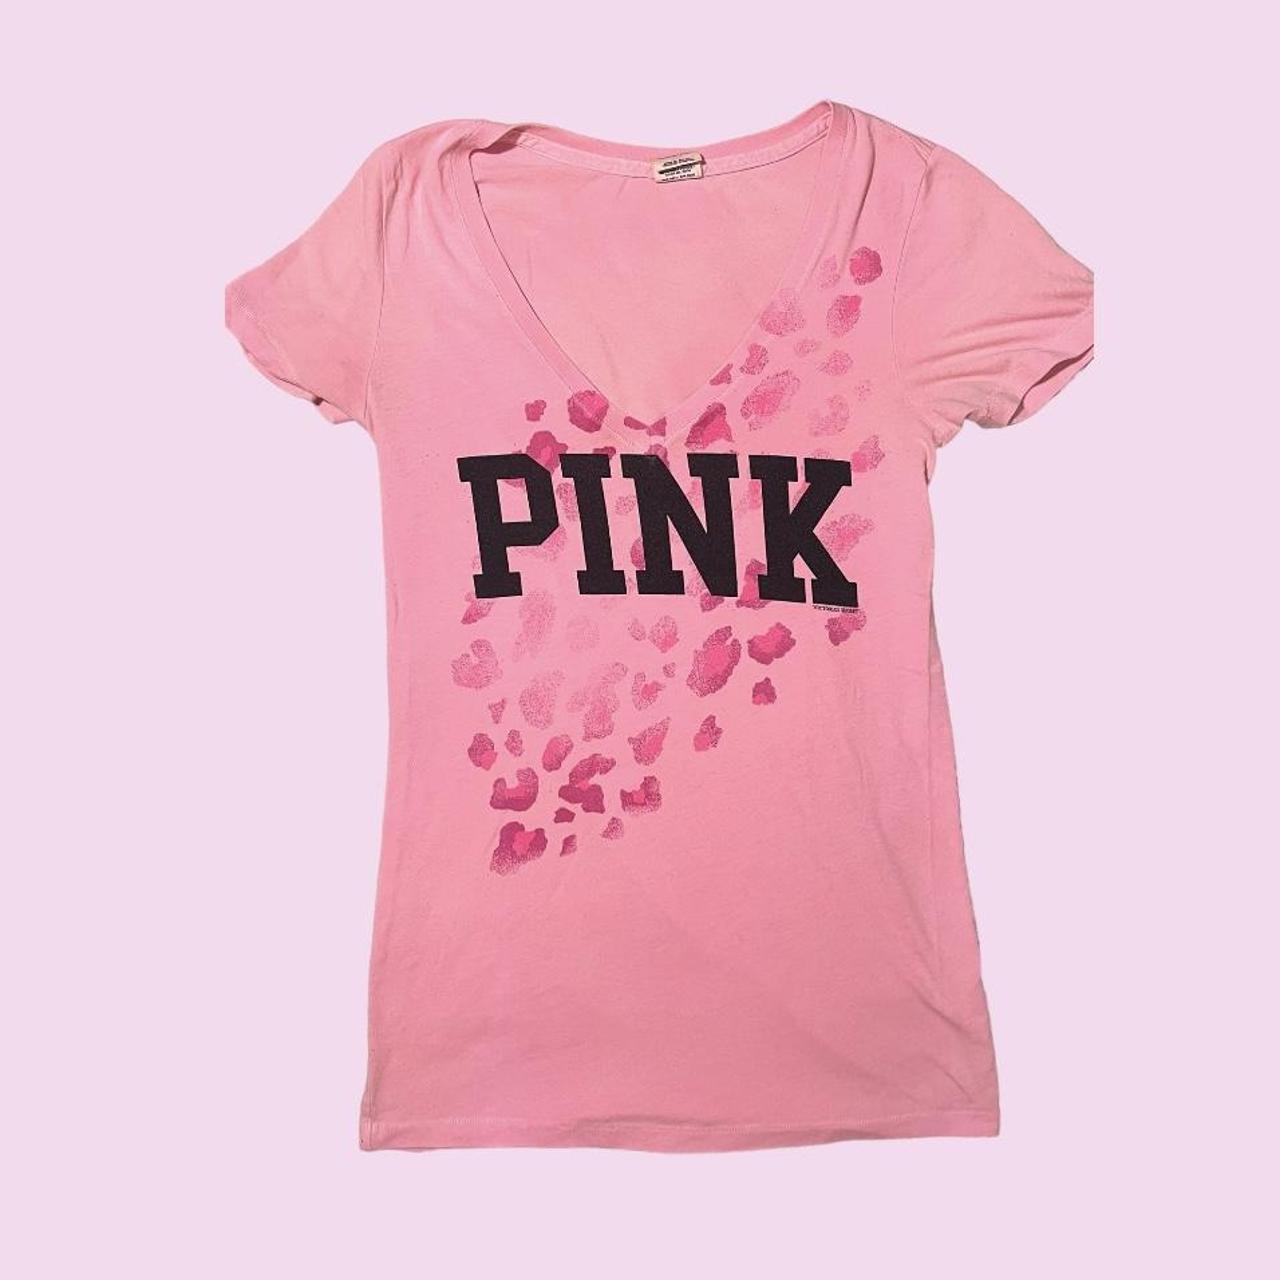 Victoria’s Secret “PINK” shirt